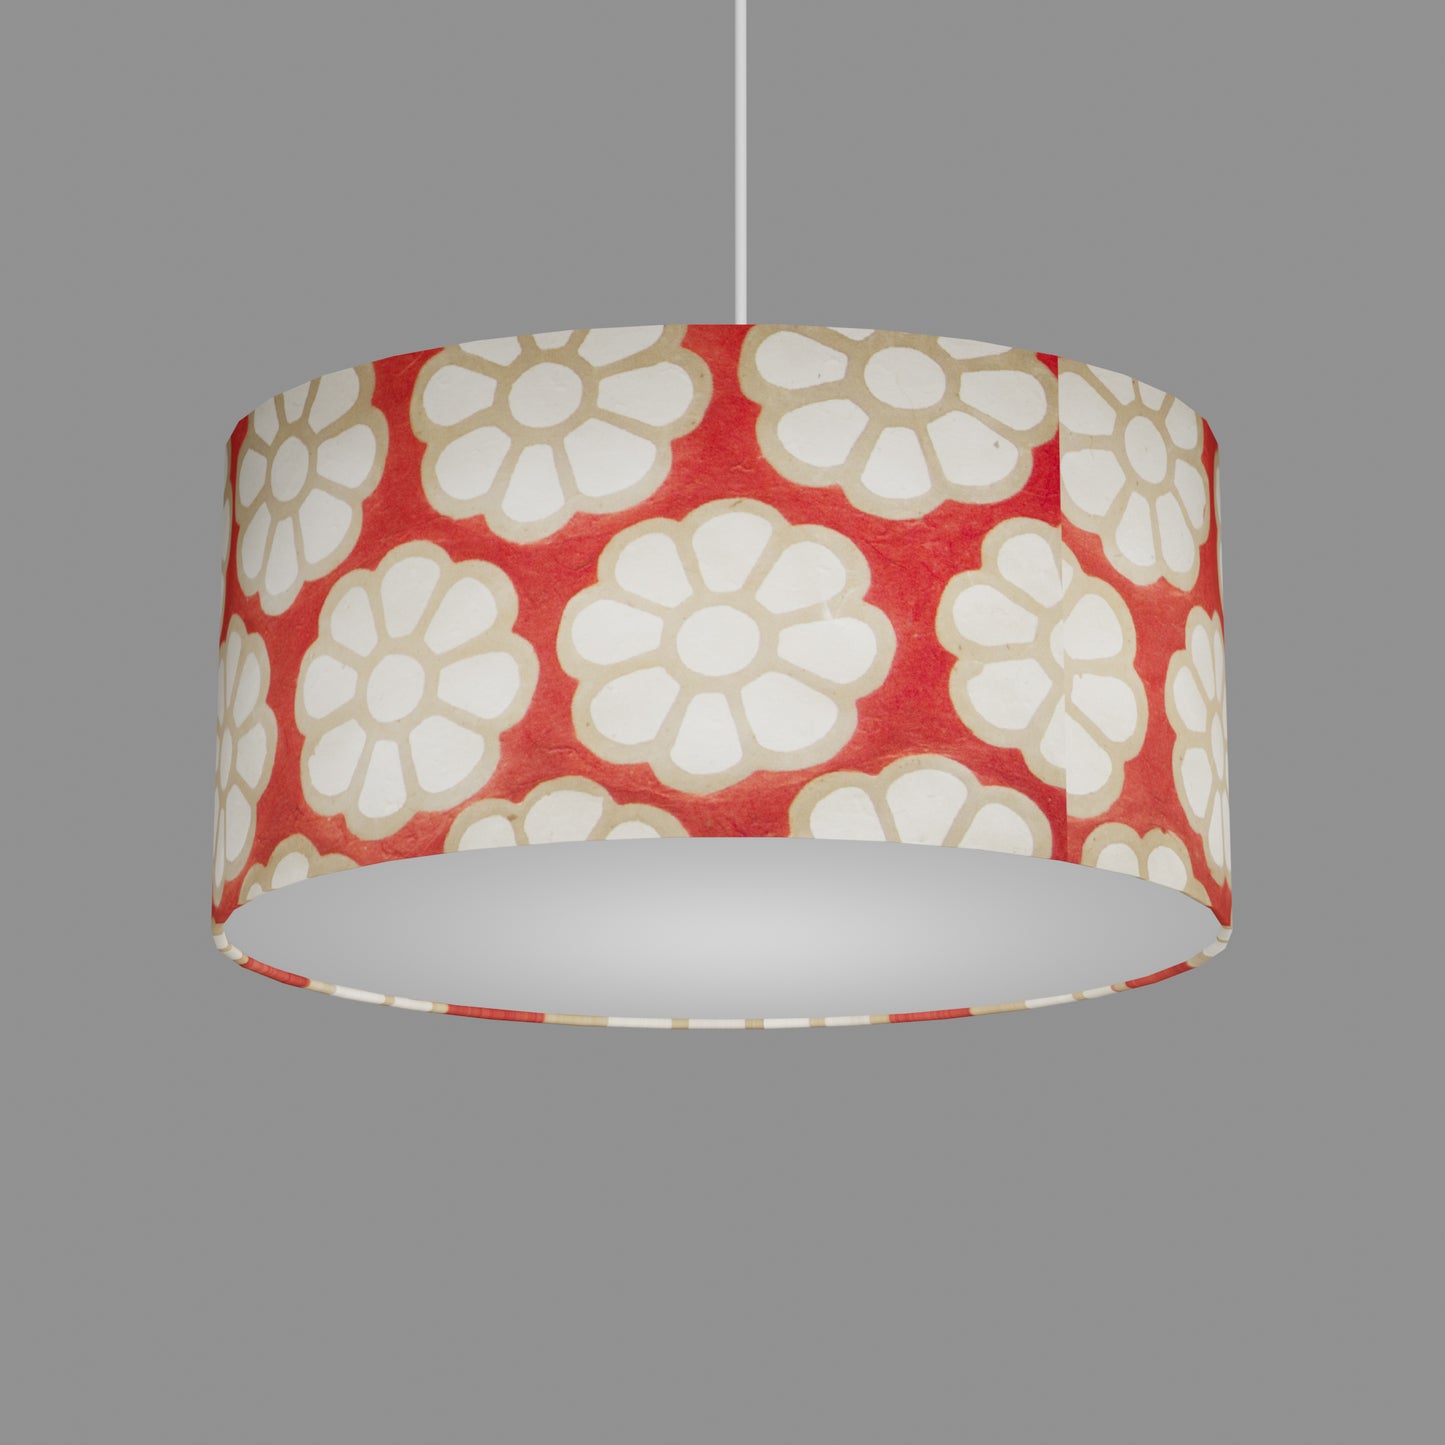 Oval Lamp Shade - P18 - Batik Big Flower on Red, 40cm(w) x 20cm(h) x 30cm(d)